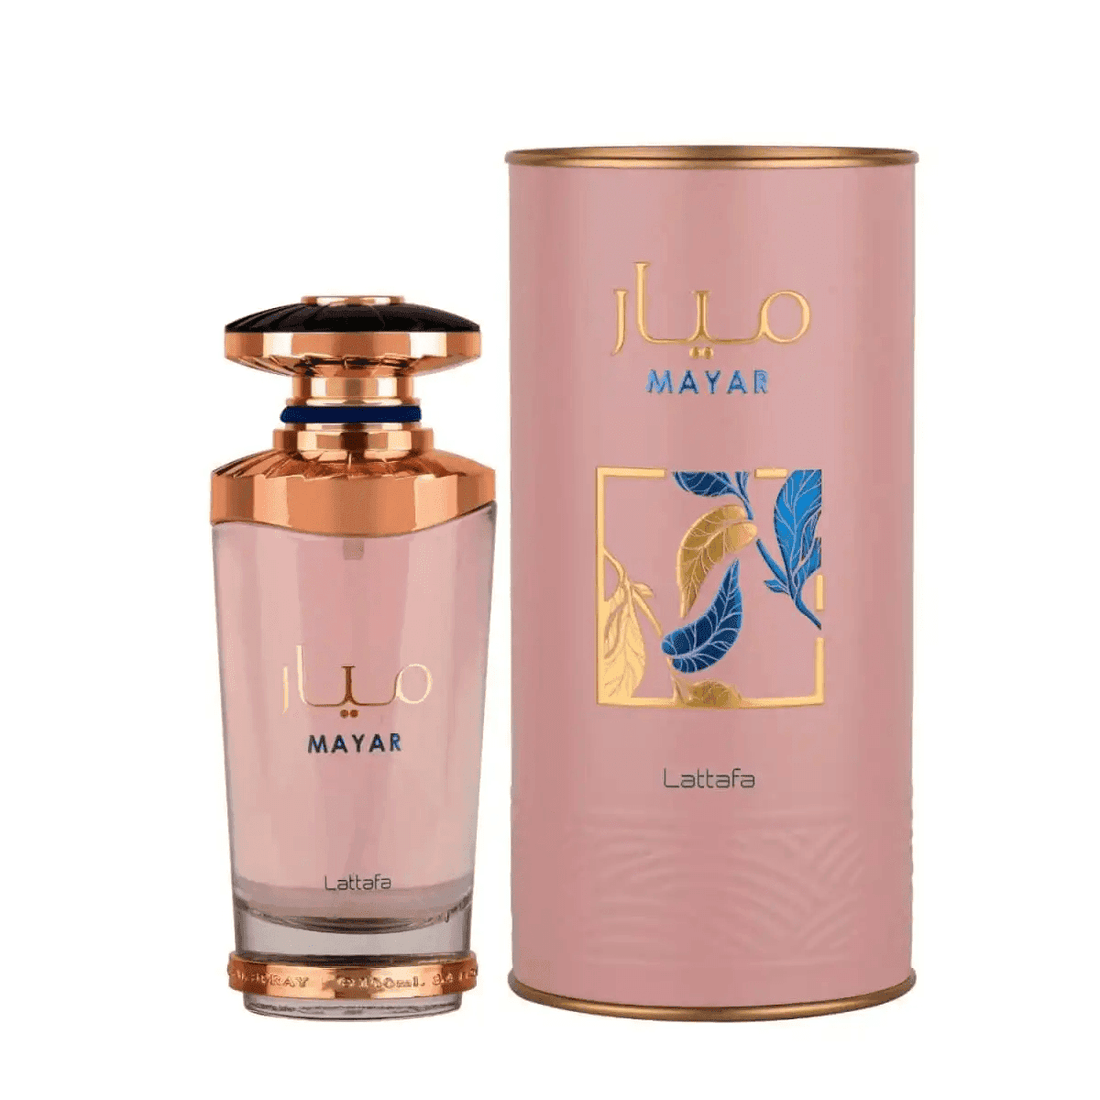 Elegant bottle of the refreshing Mayar Eau De Perfume by Lattafa, symbolizing the essence of Arabian summers.